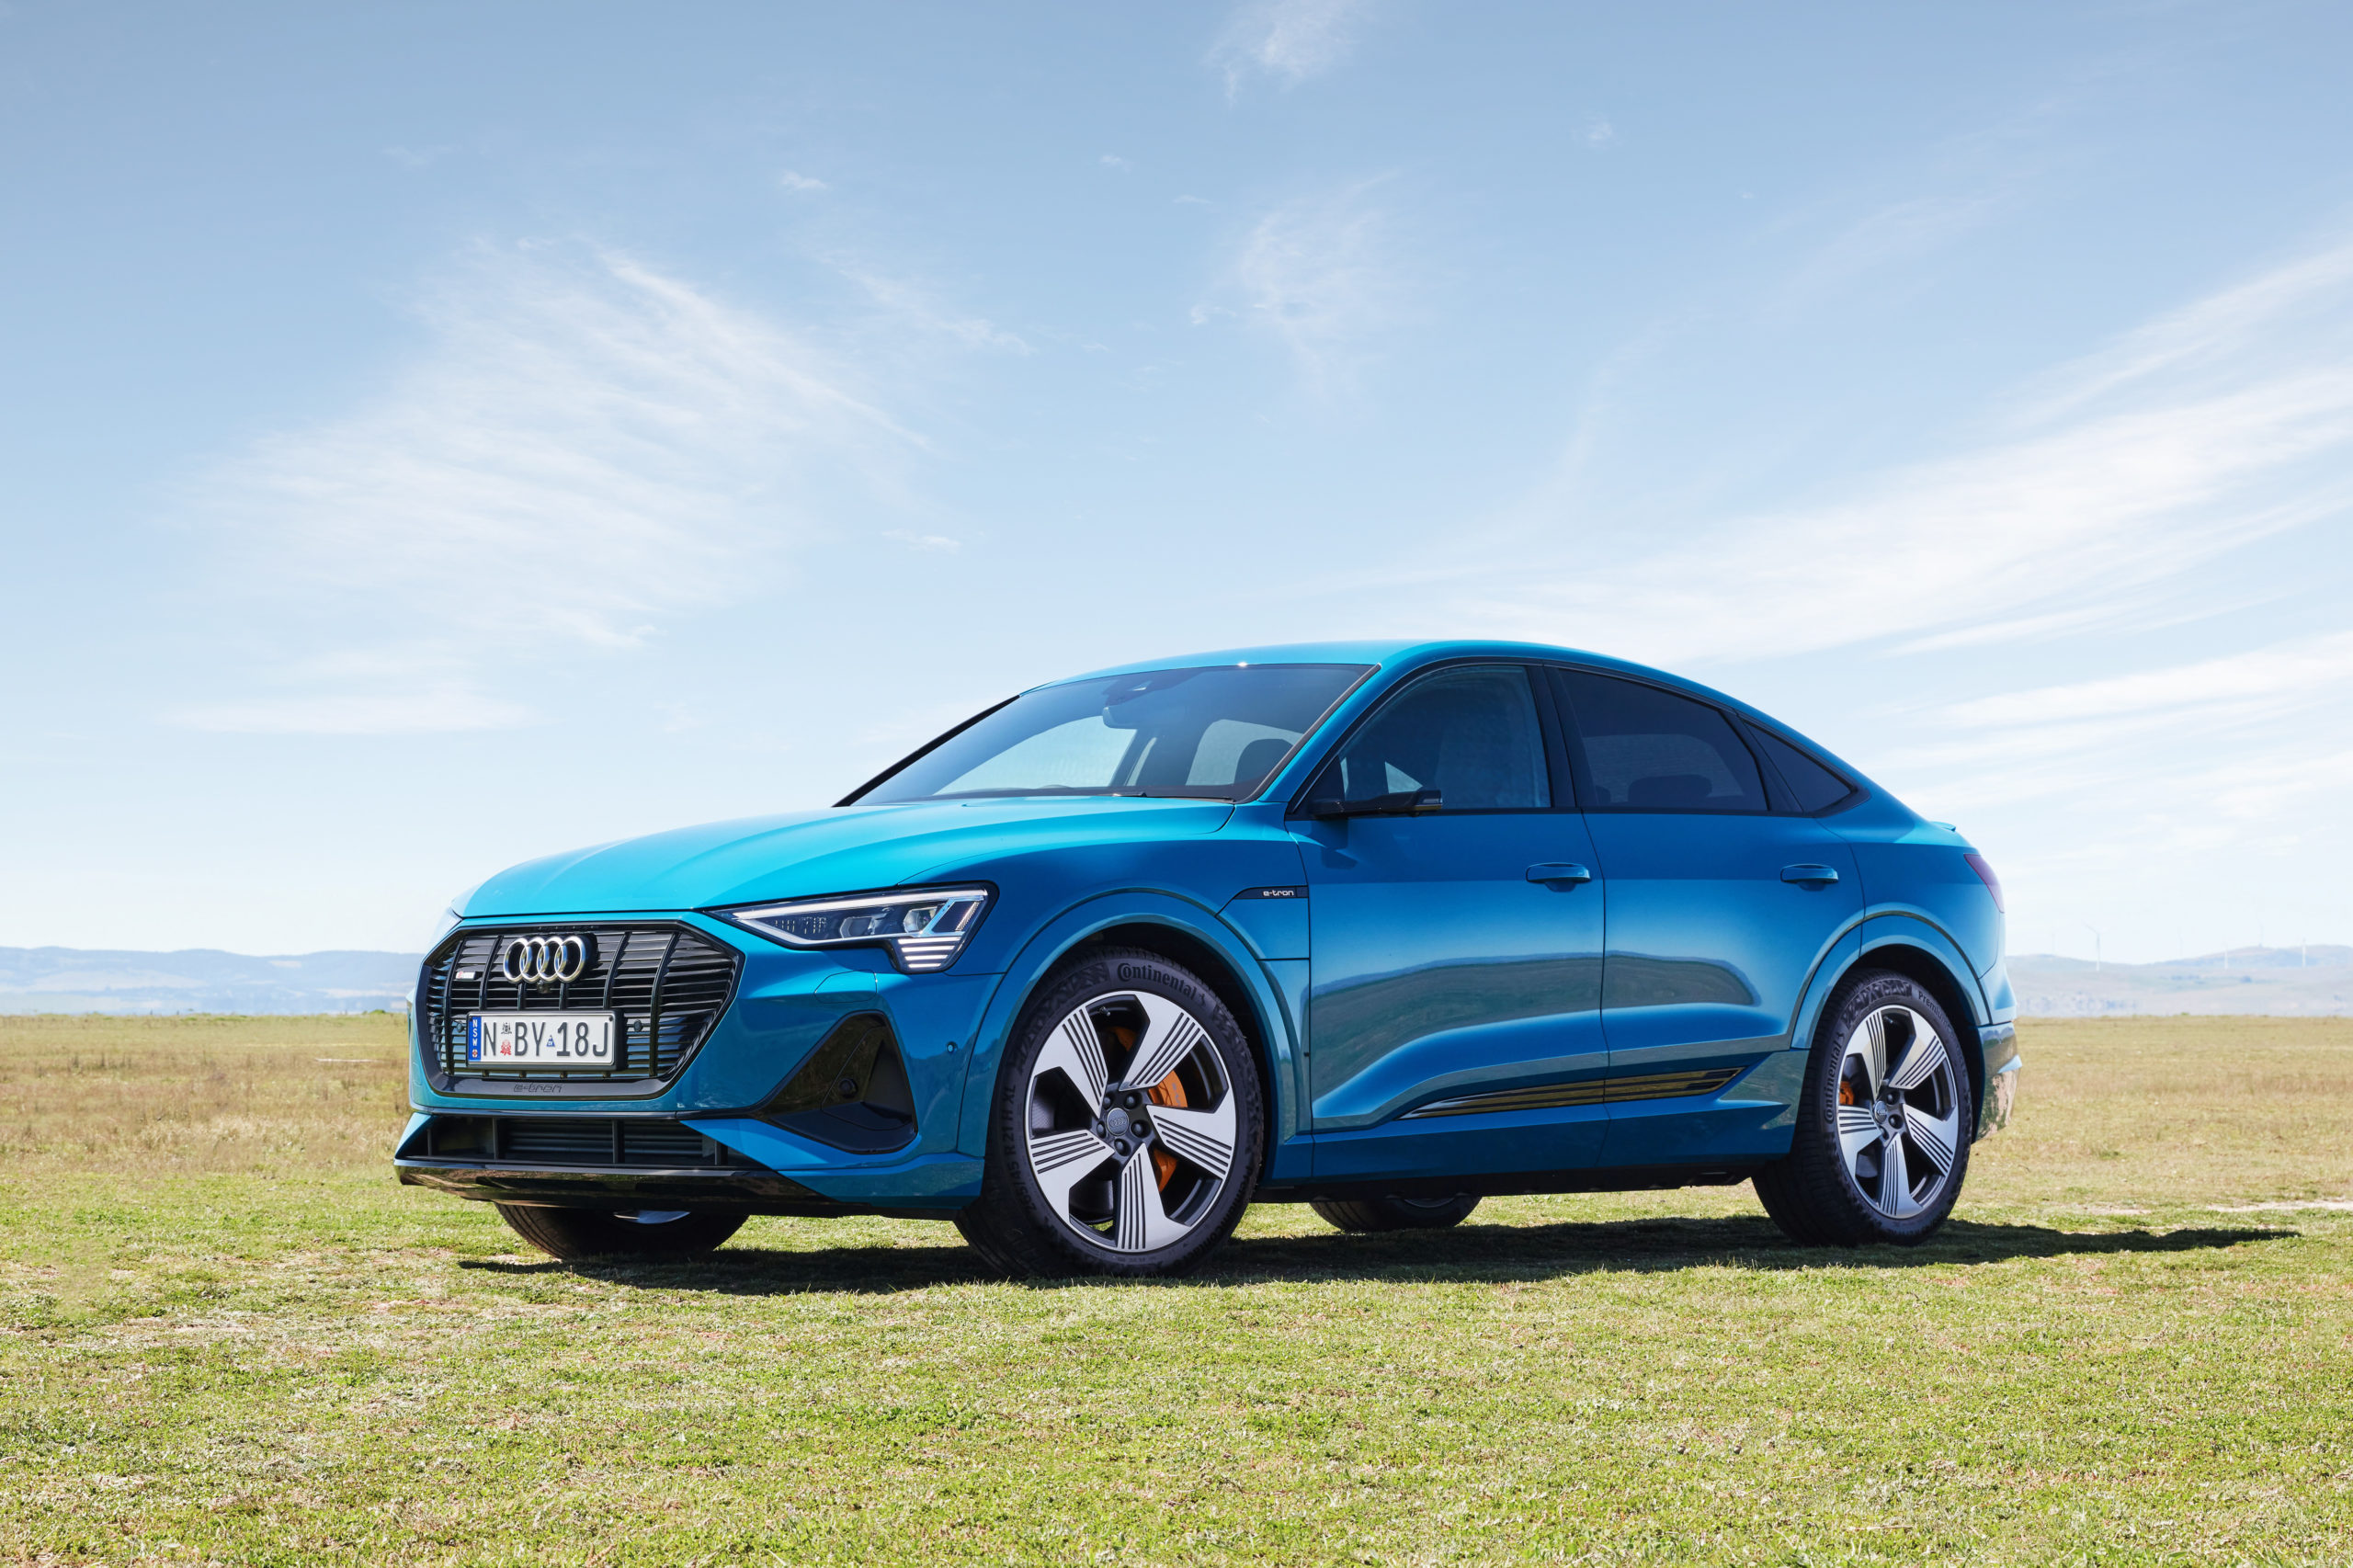 REVIEW: 2020 Audi e-tron Sportback - the electric performance SUV 